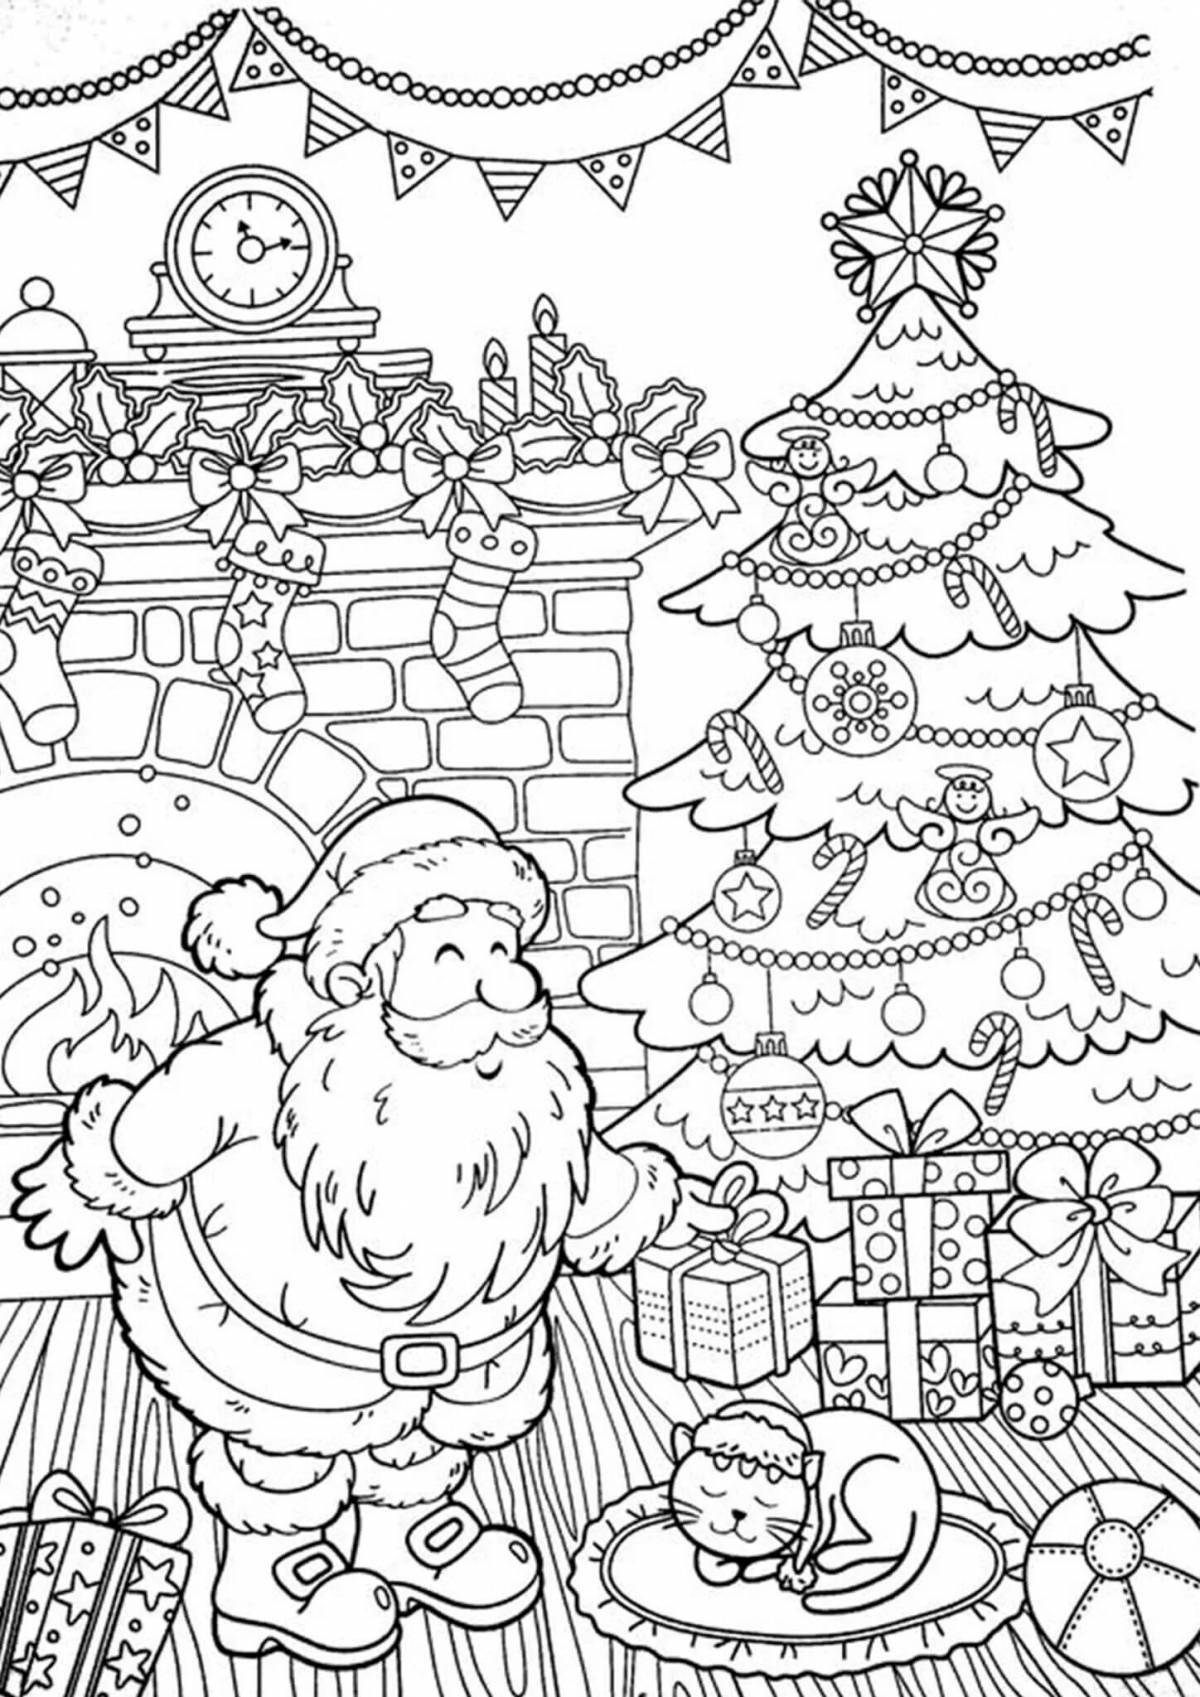 Santa Claus and Christmas tree #8